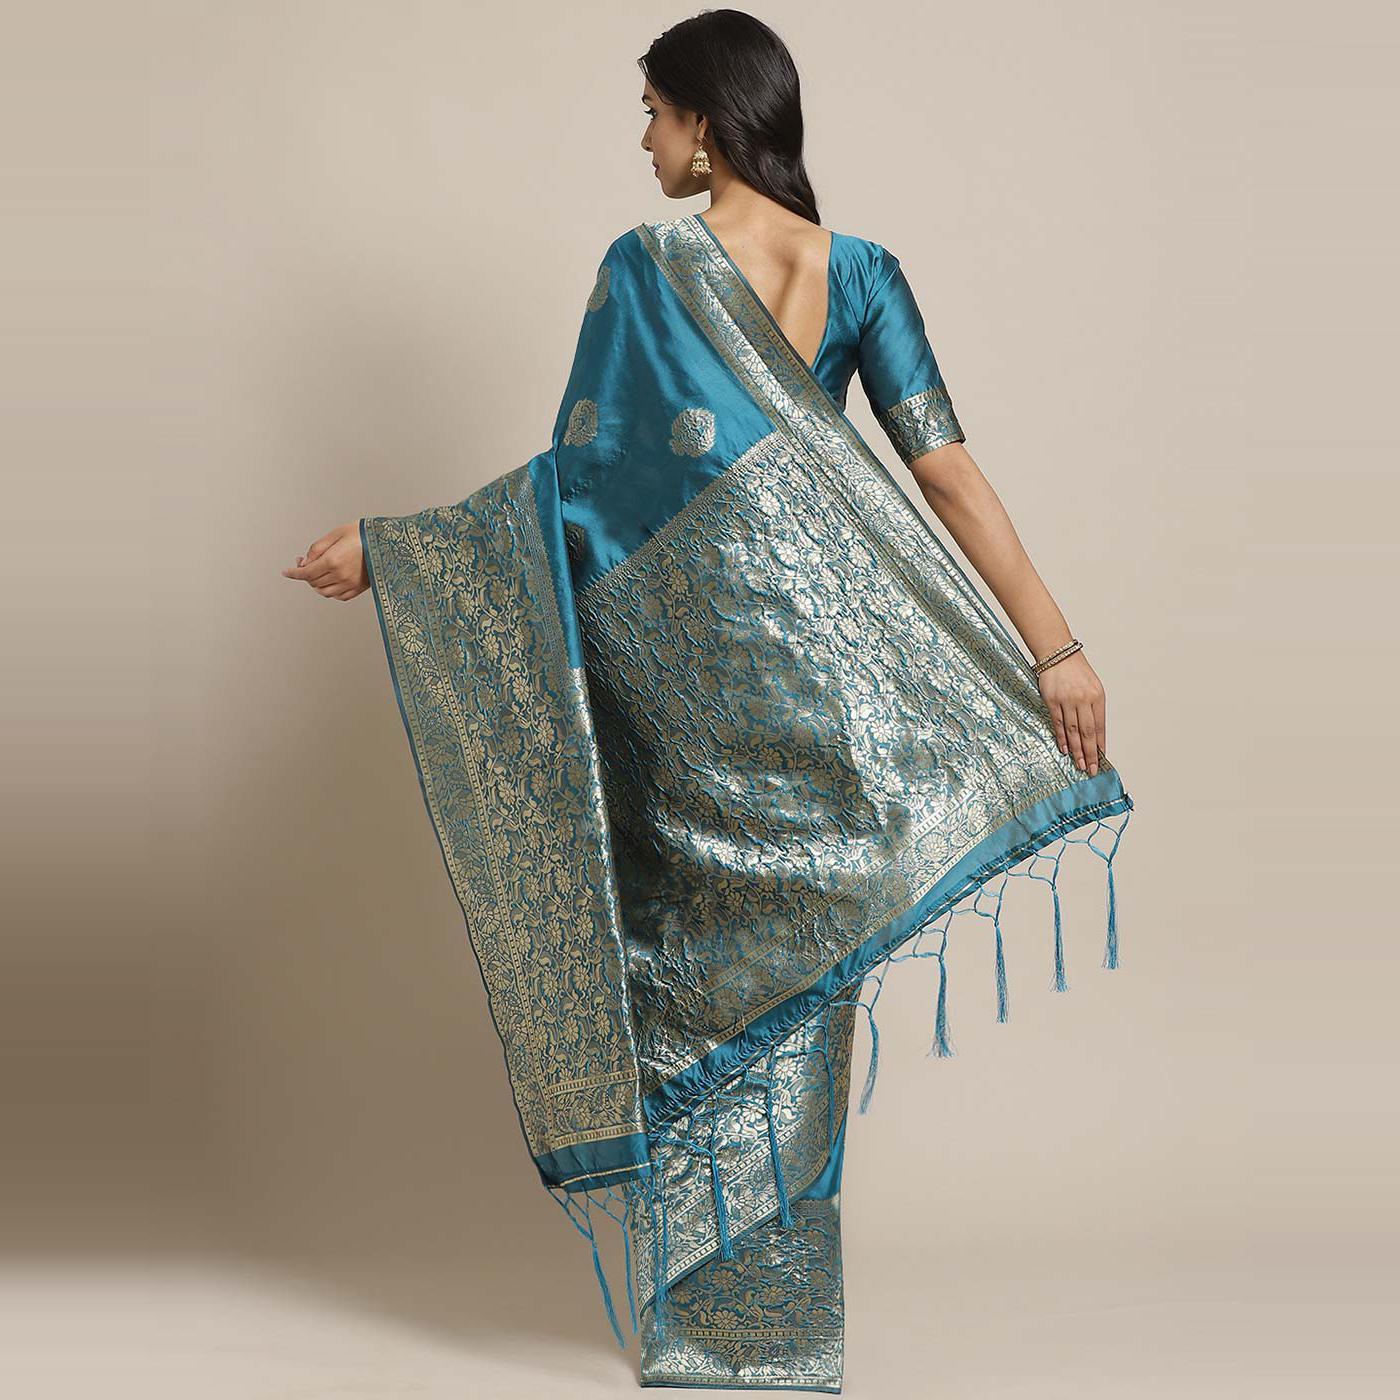 Adorable Teal Blue Colored Festive Wear Woven Silk Blend Saree - Peachmode